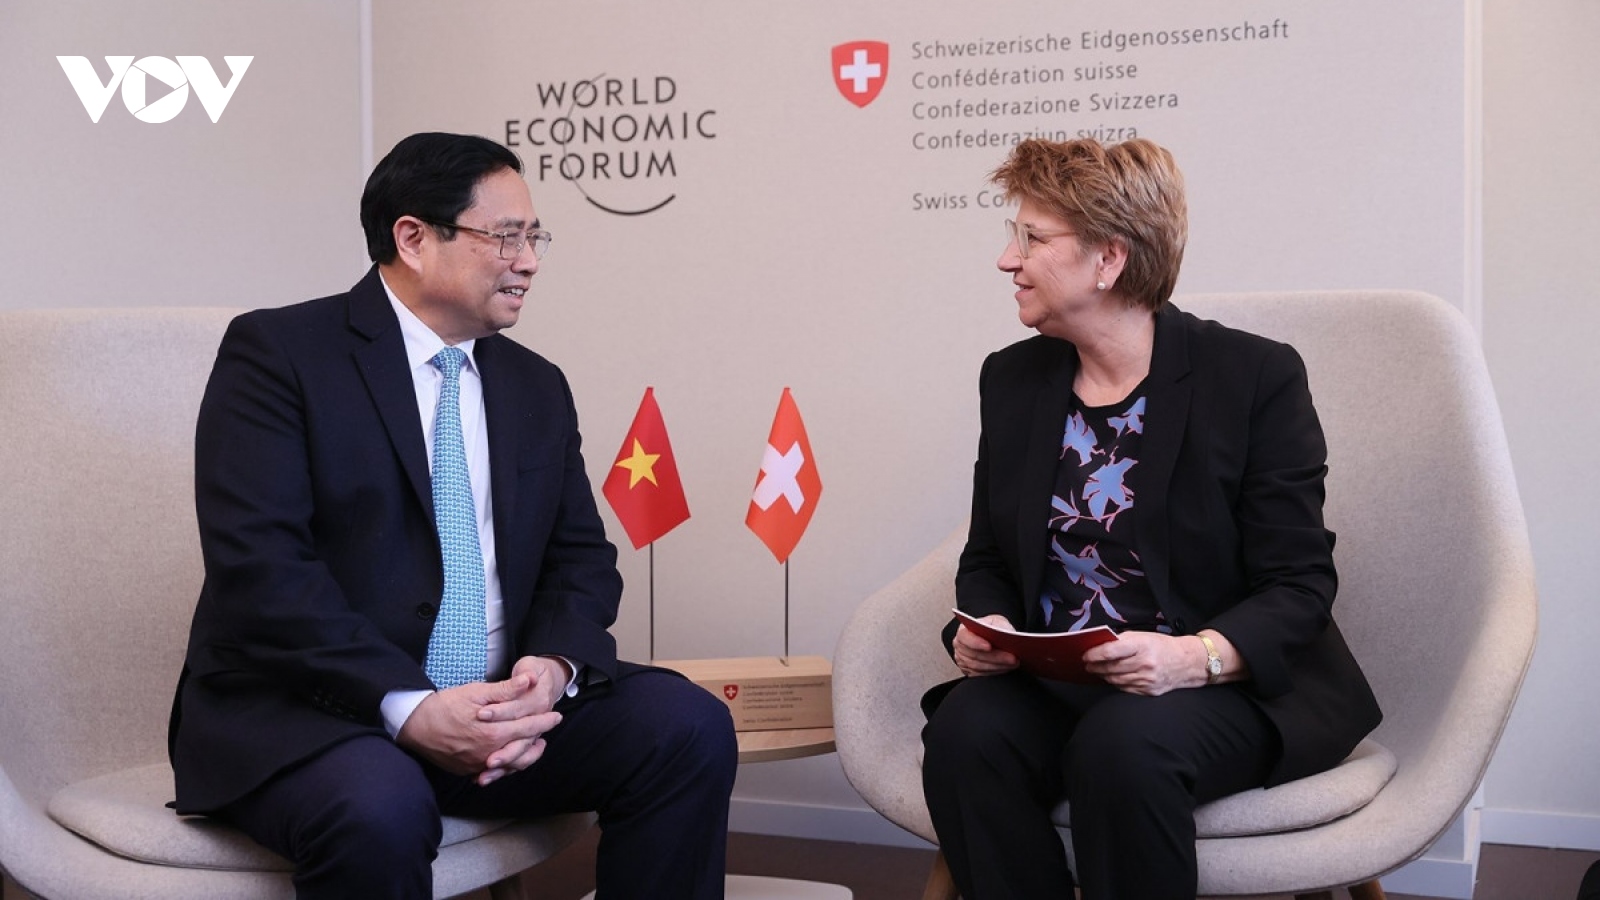 Switzerland considers Vietnam a key economic partner in Southeast Asia